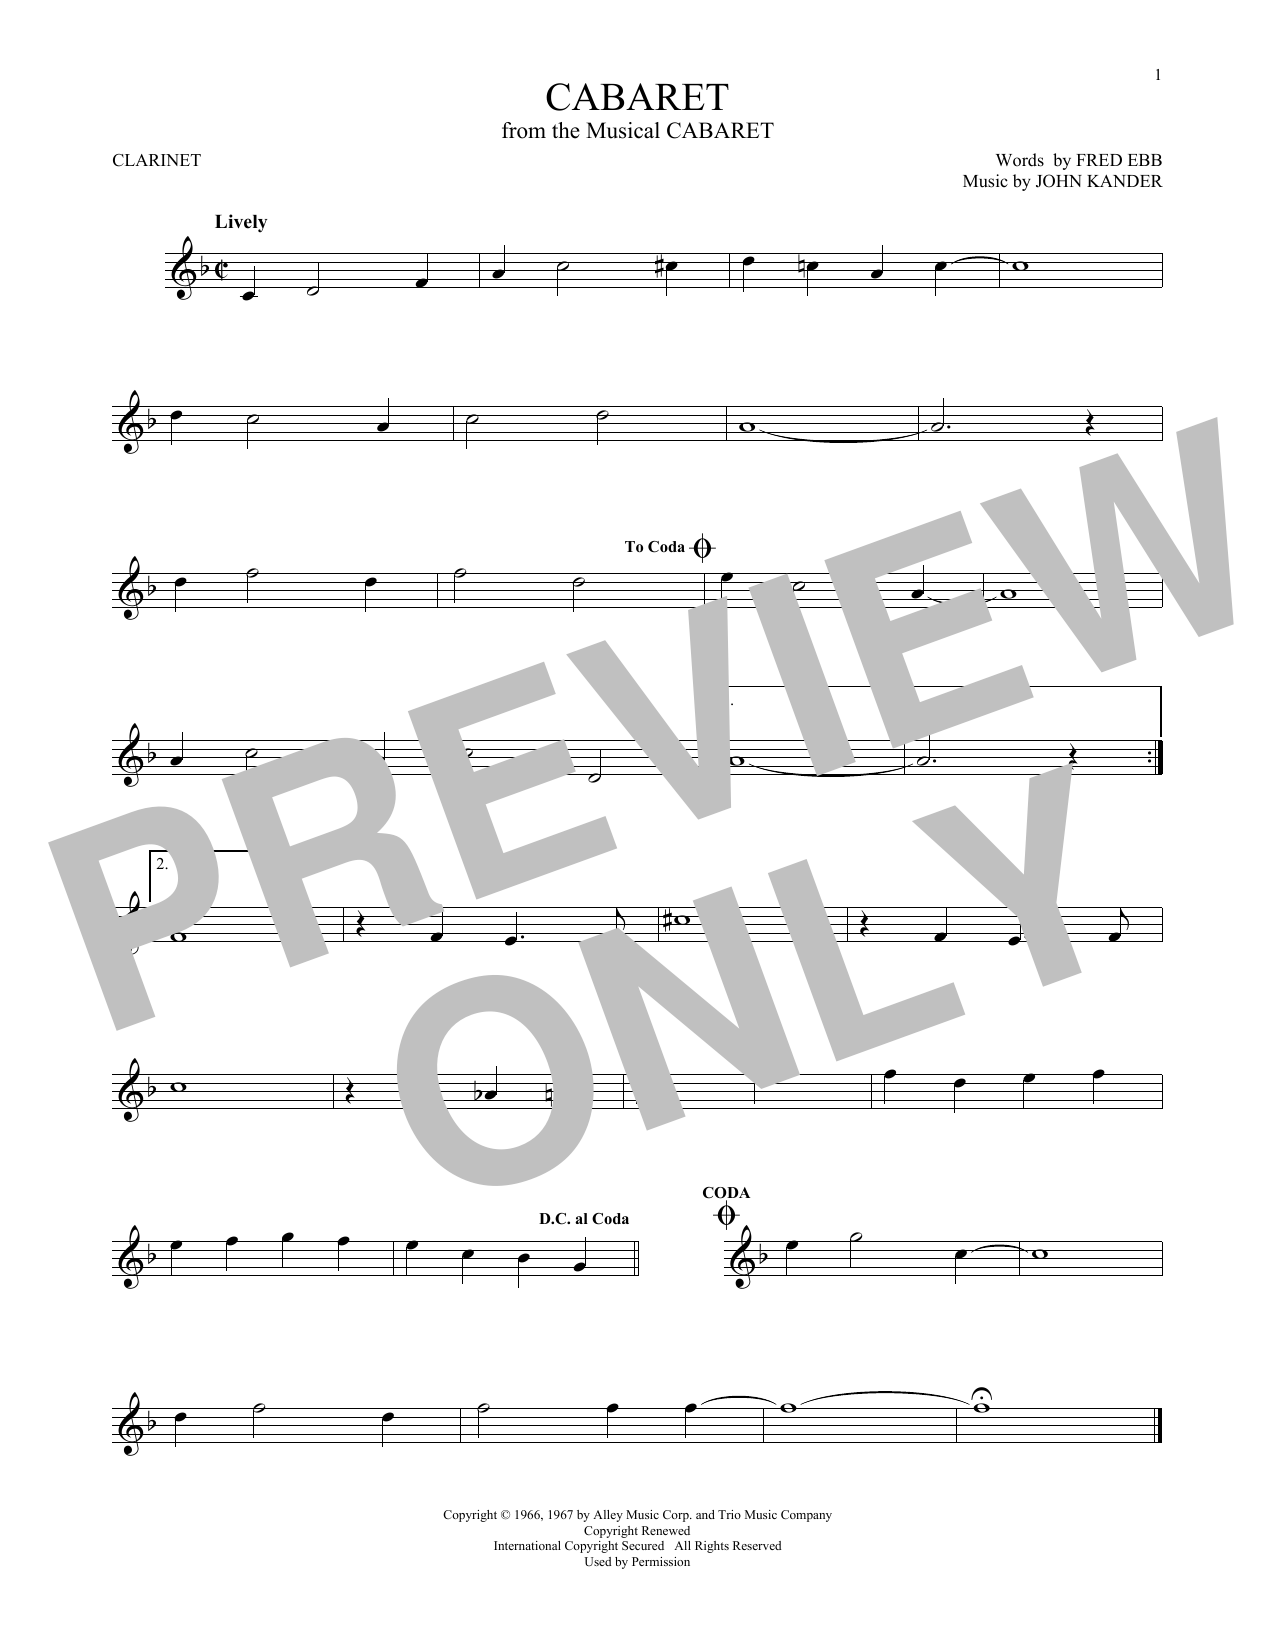 John Kander & Fred Ebb Cabaret Sheet Music Notes & Chords for Cello - Download or Print PDF